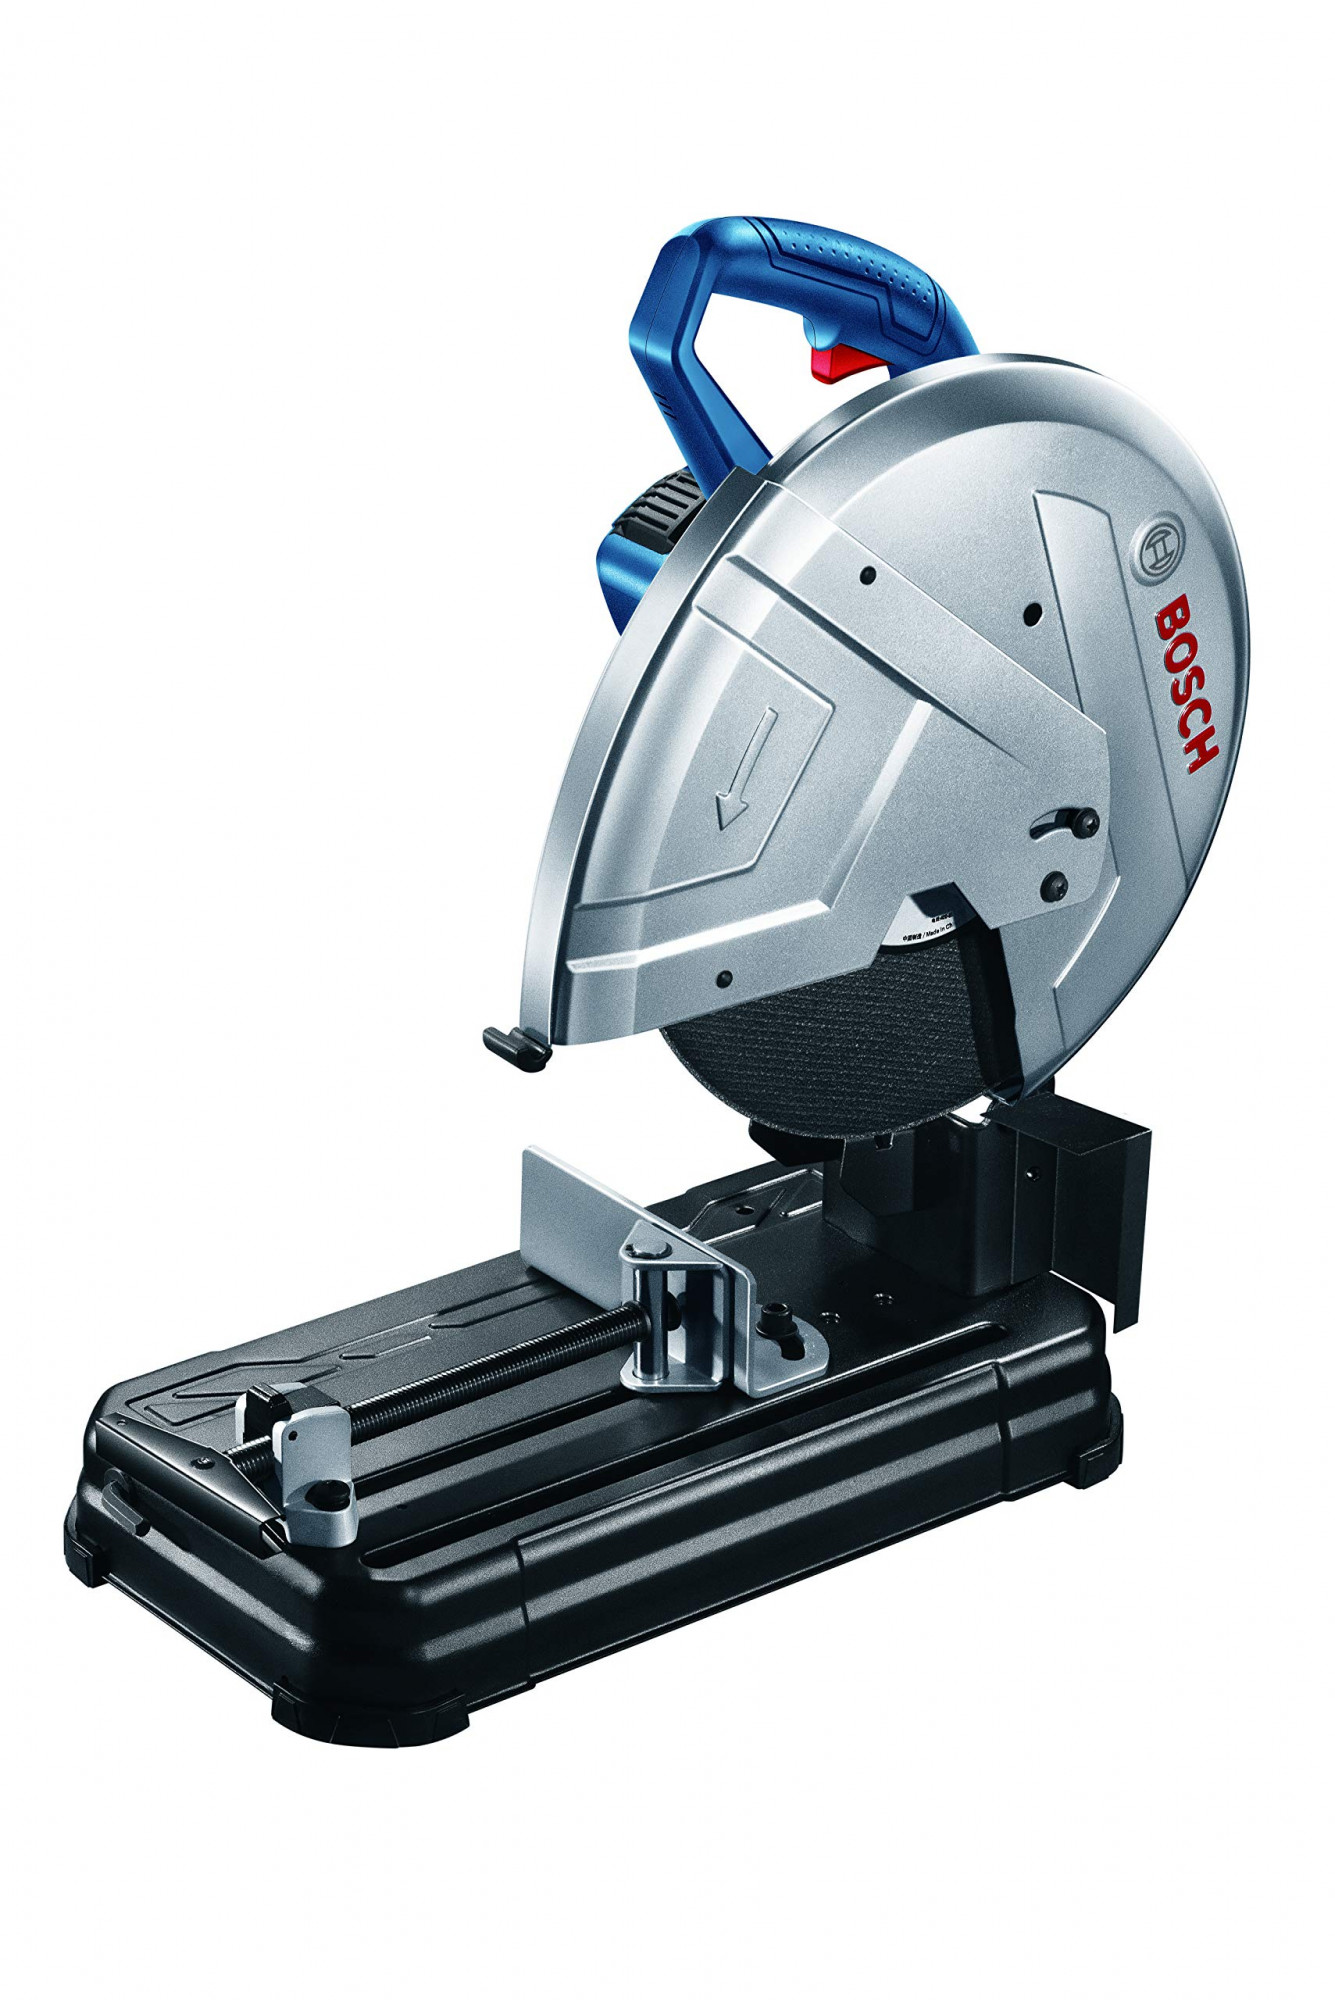 Bosch 0601B373F0-GCO220 2200-Watt 14-inch Chop Saw Machine (Blue) with GDC 120 Professional Marble Cutter Combo